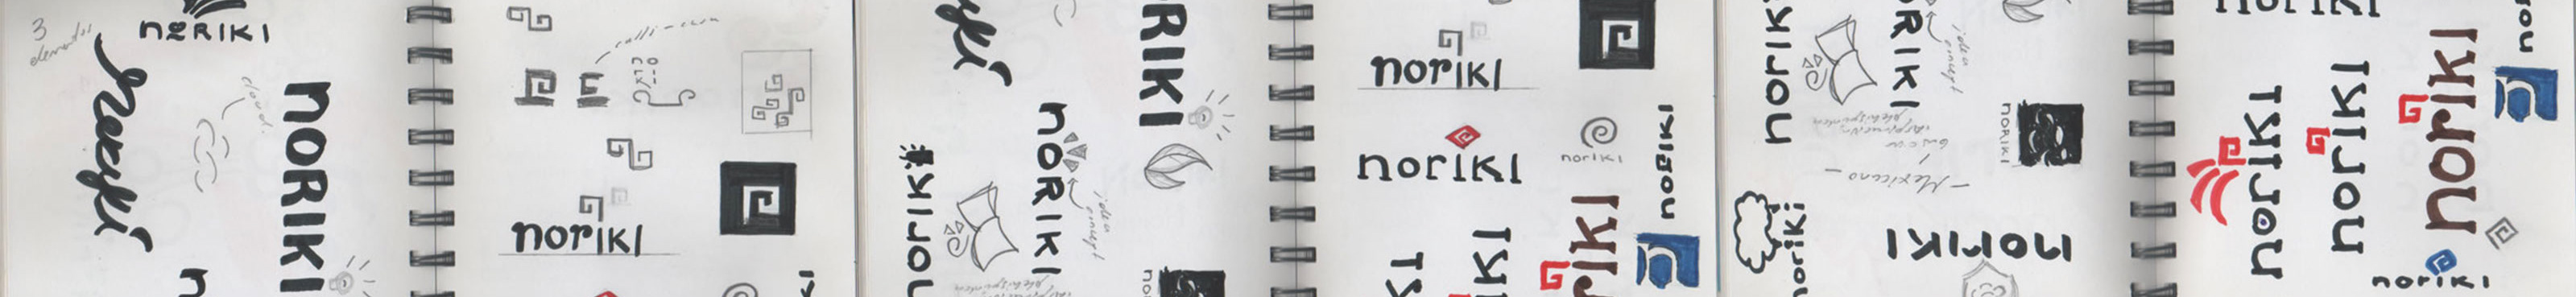 noriki —'s profile banner